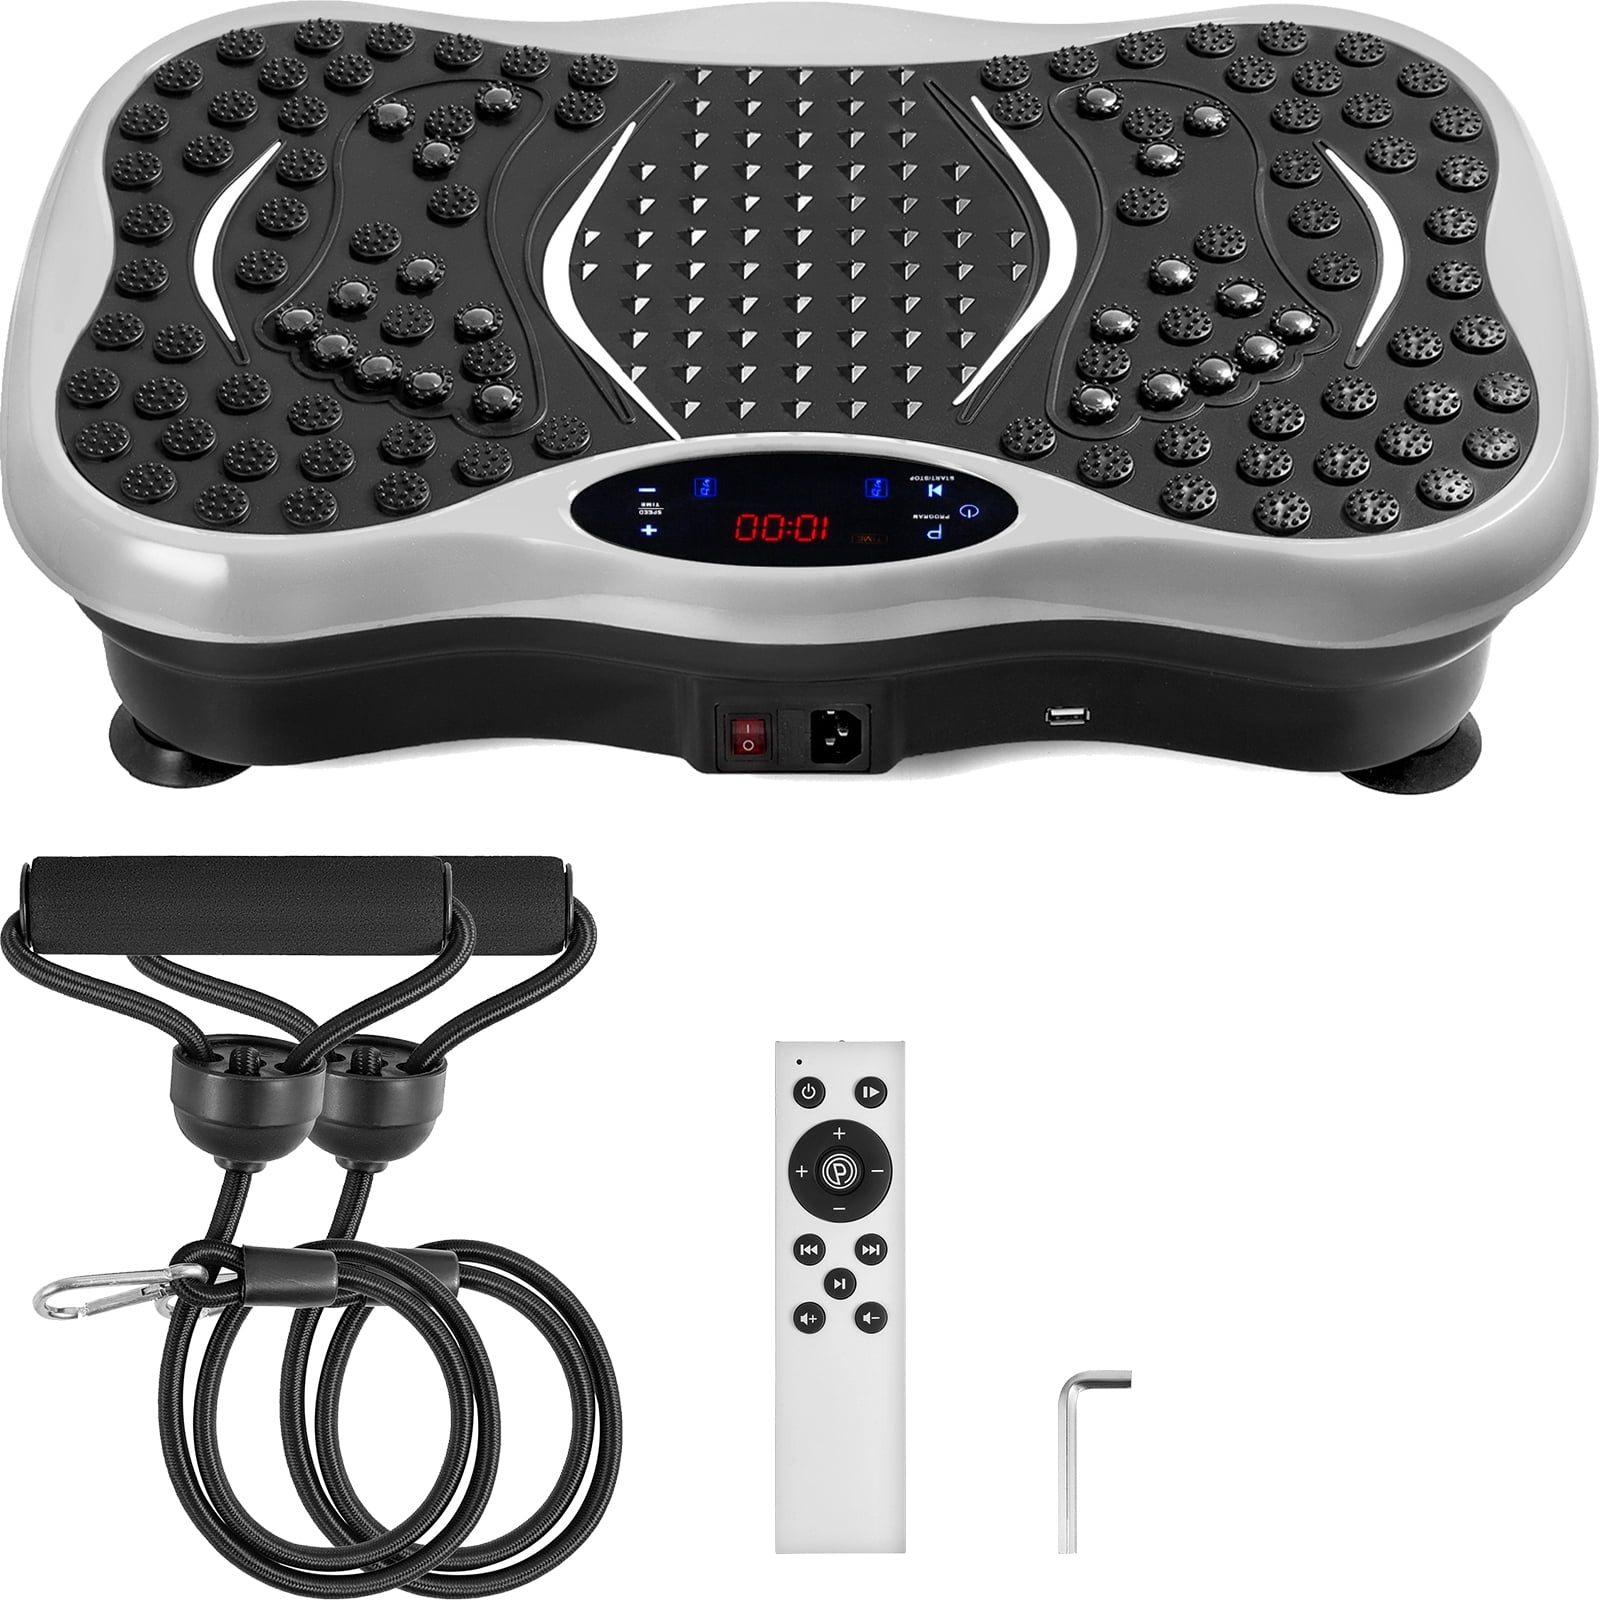 Details about   Crazy Fit Massage Full Body Vibration Platform Machine Fitness W/Bluetooth Red U 